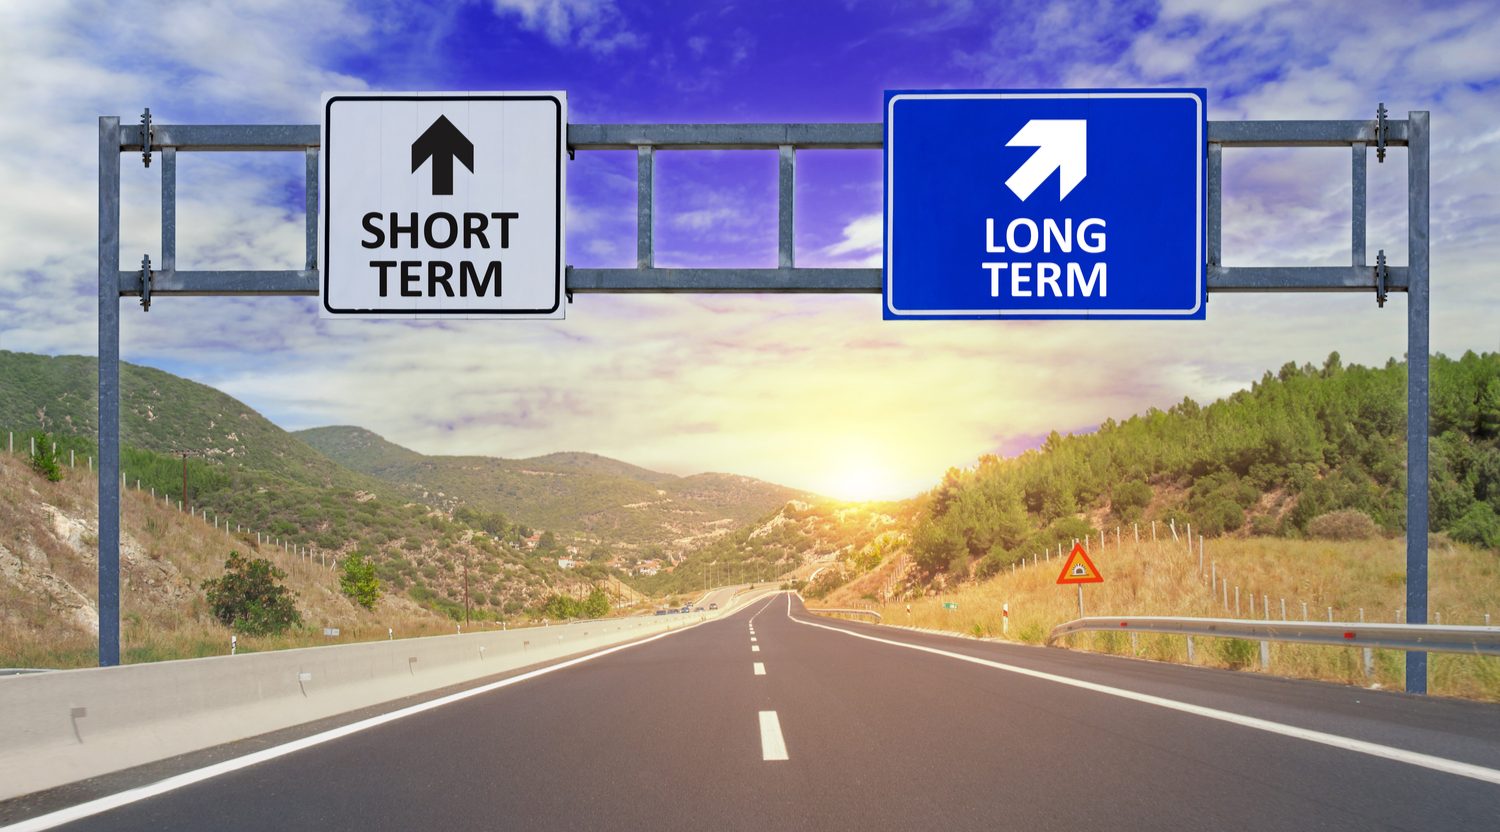 long-term short-term